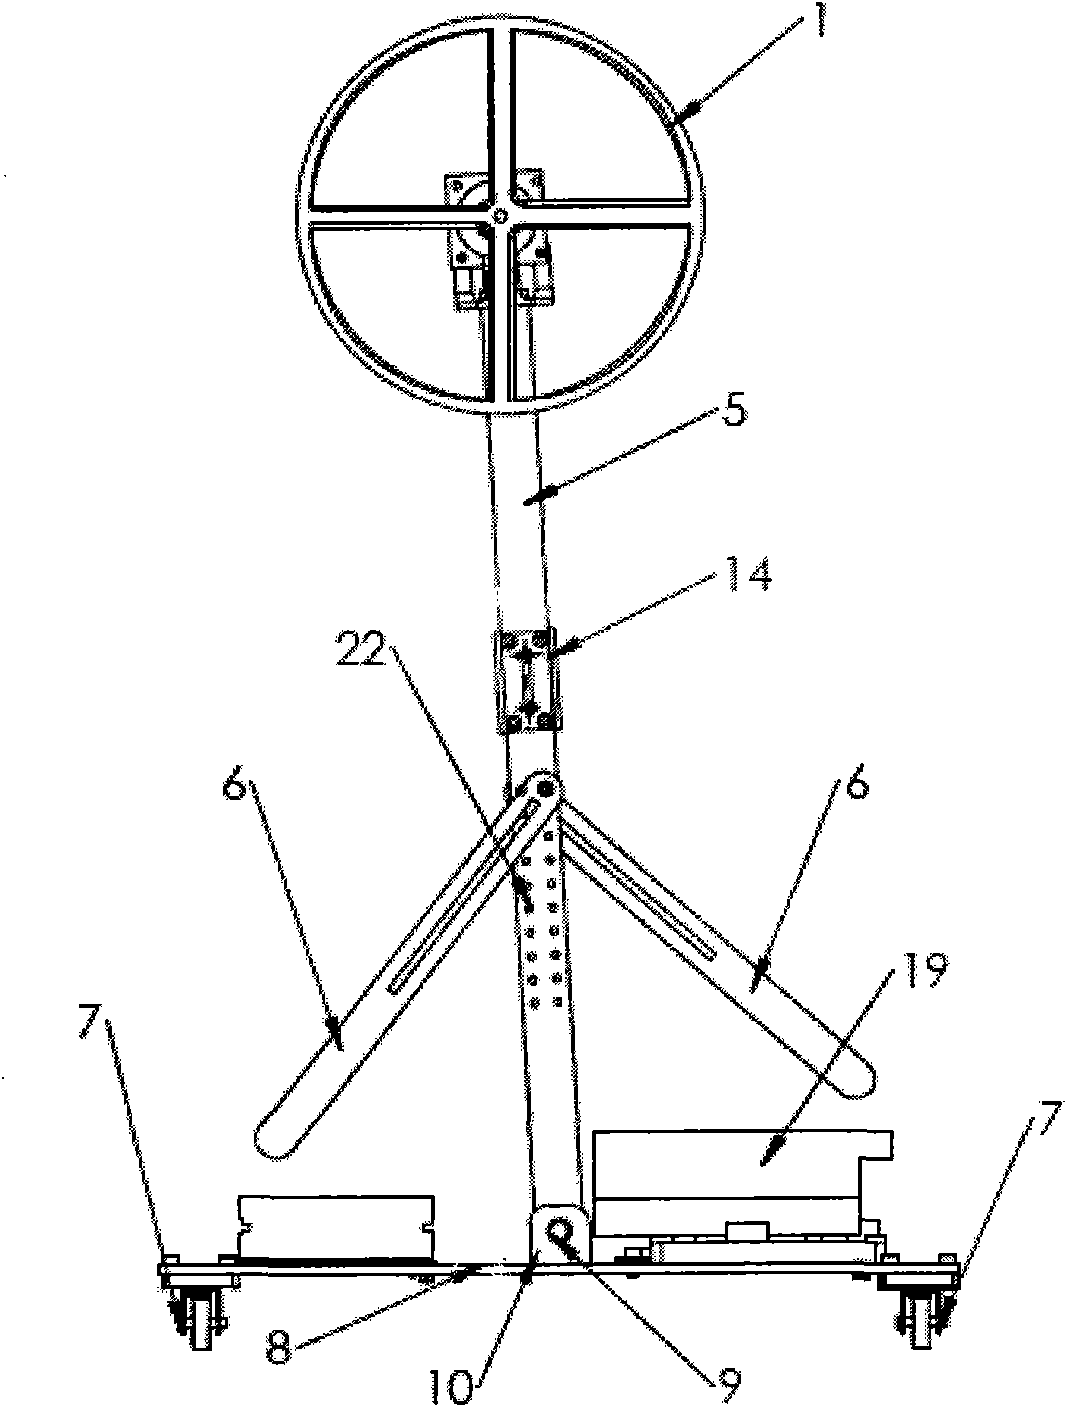 Inverted pendulum balancing control system based on flywheel